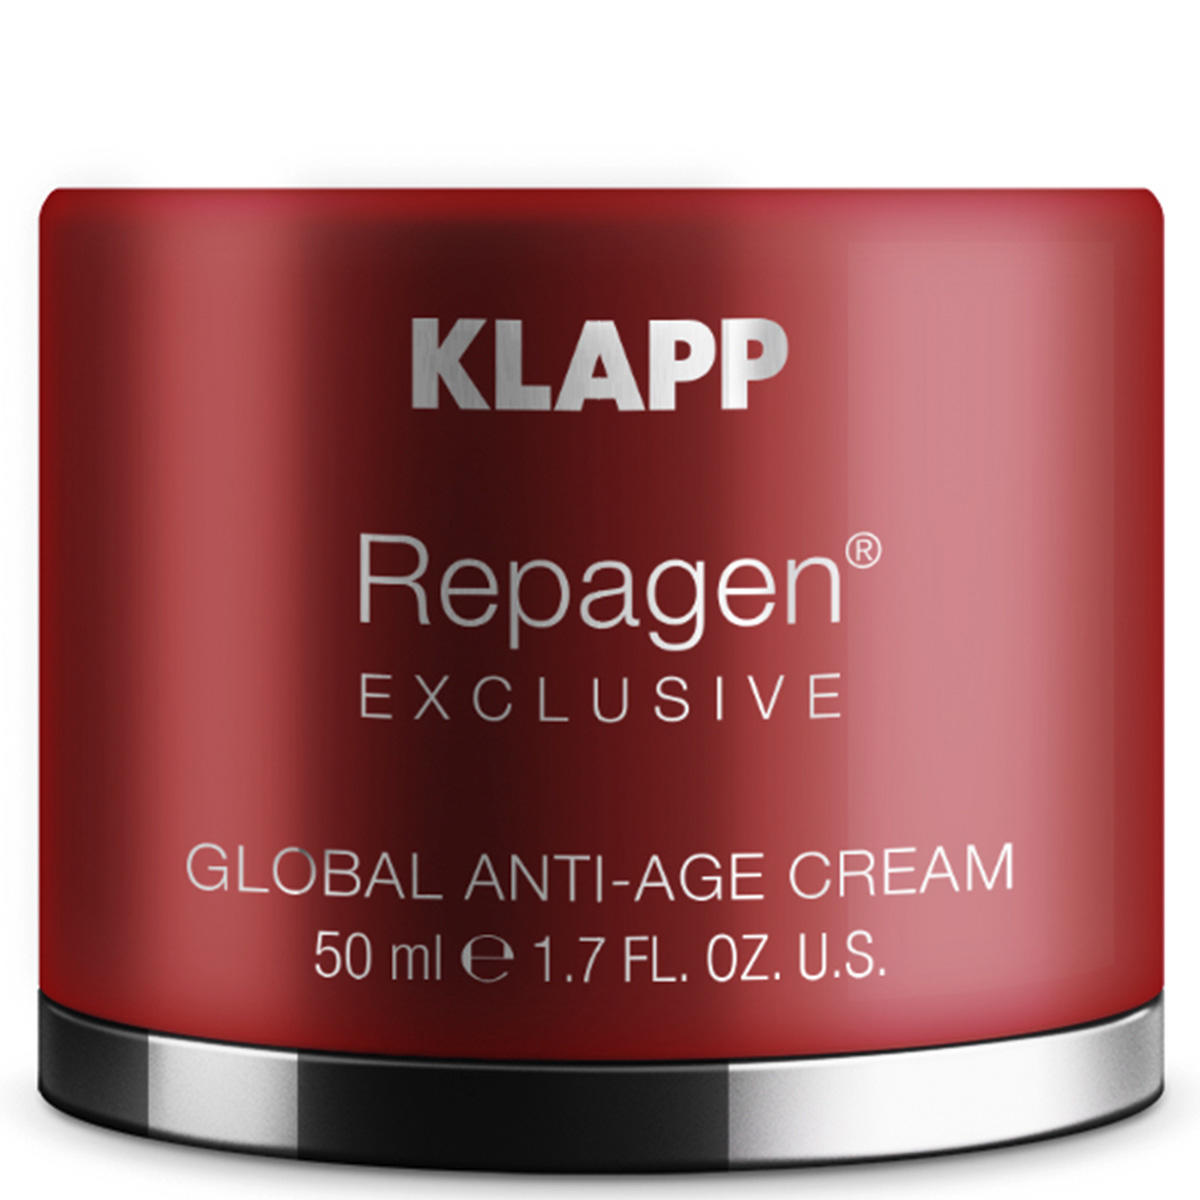 KLAPP REPAGEN EXCLUSIVE Global Anti-Age Cream 50 ml - 1